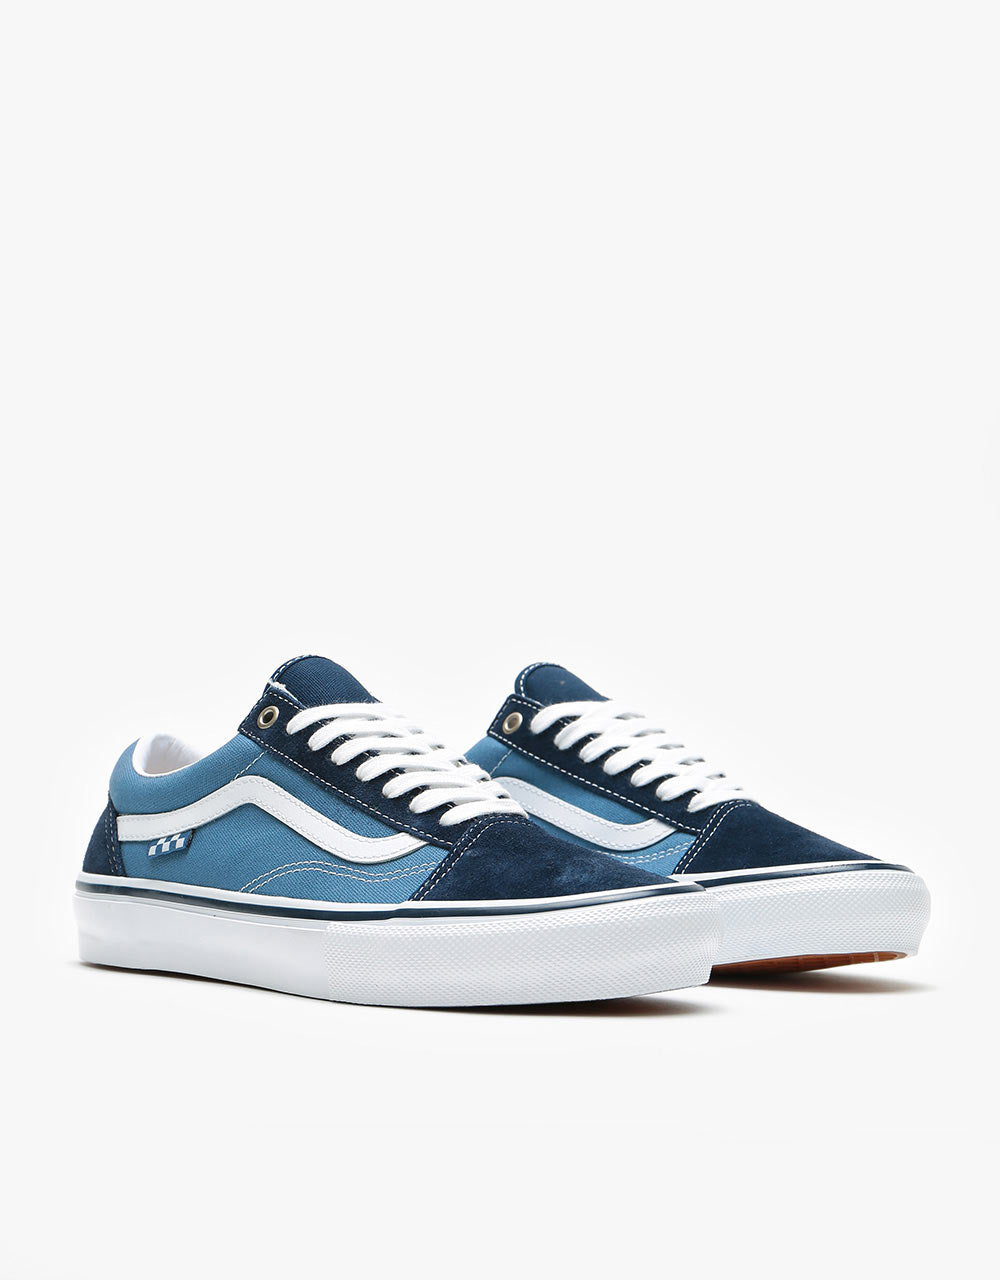 Vans Skate Old Skool Shoes - Navy/White